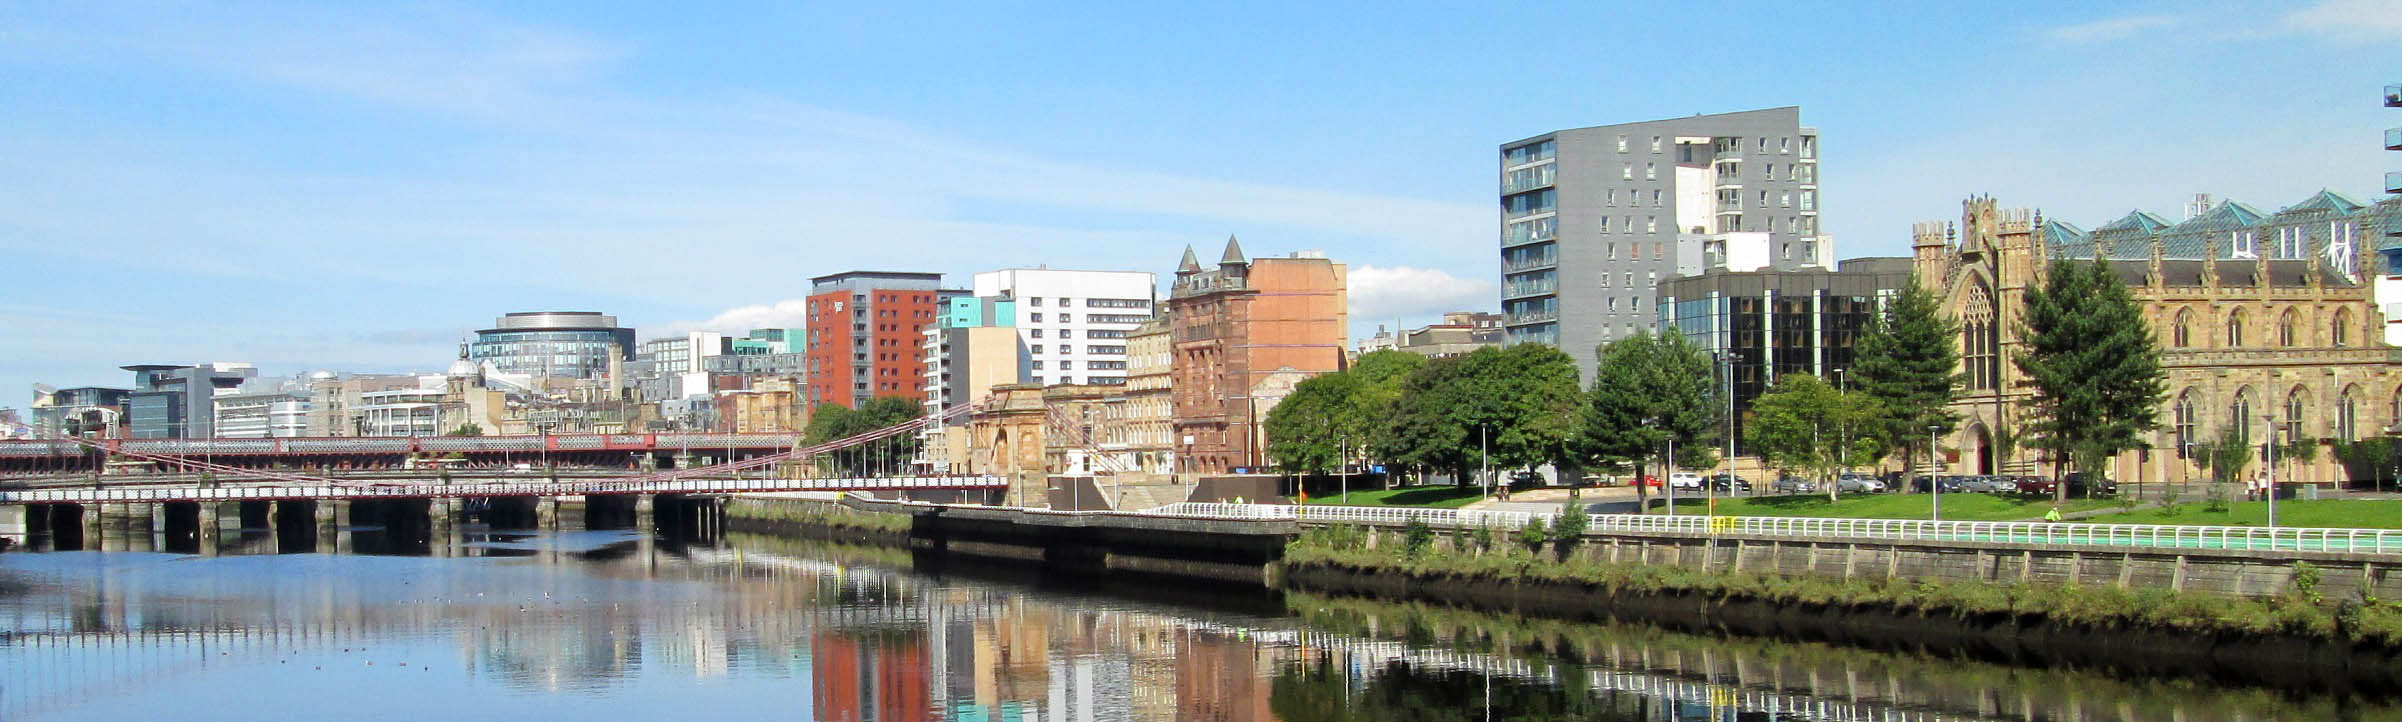 The City of Glasgow